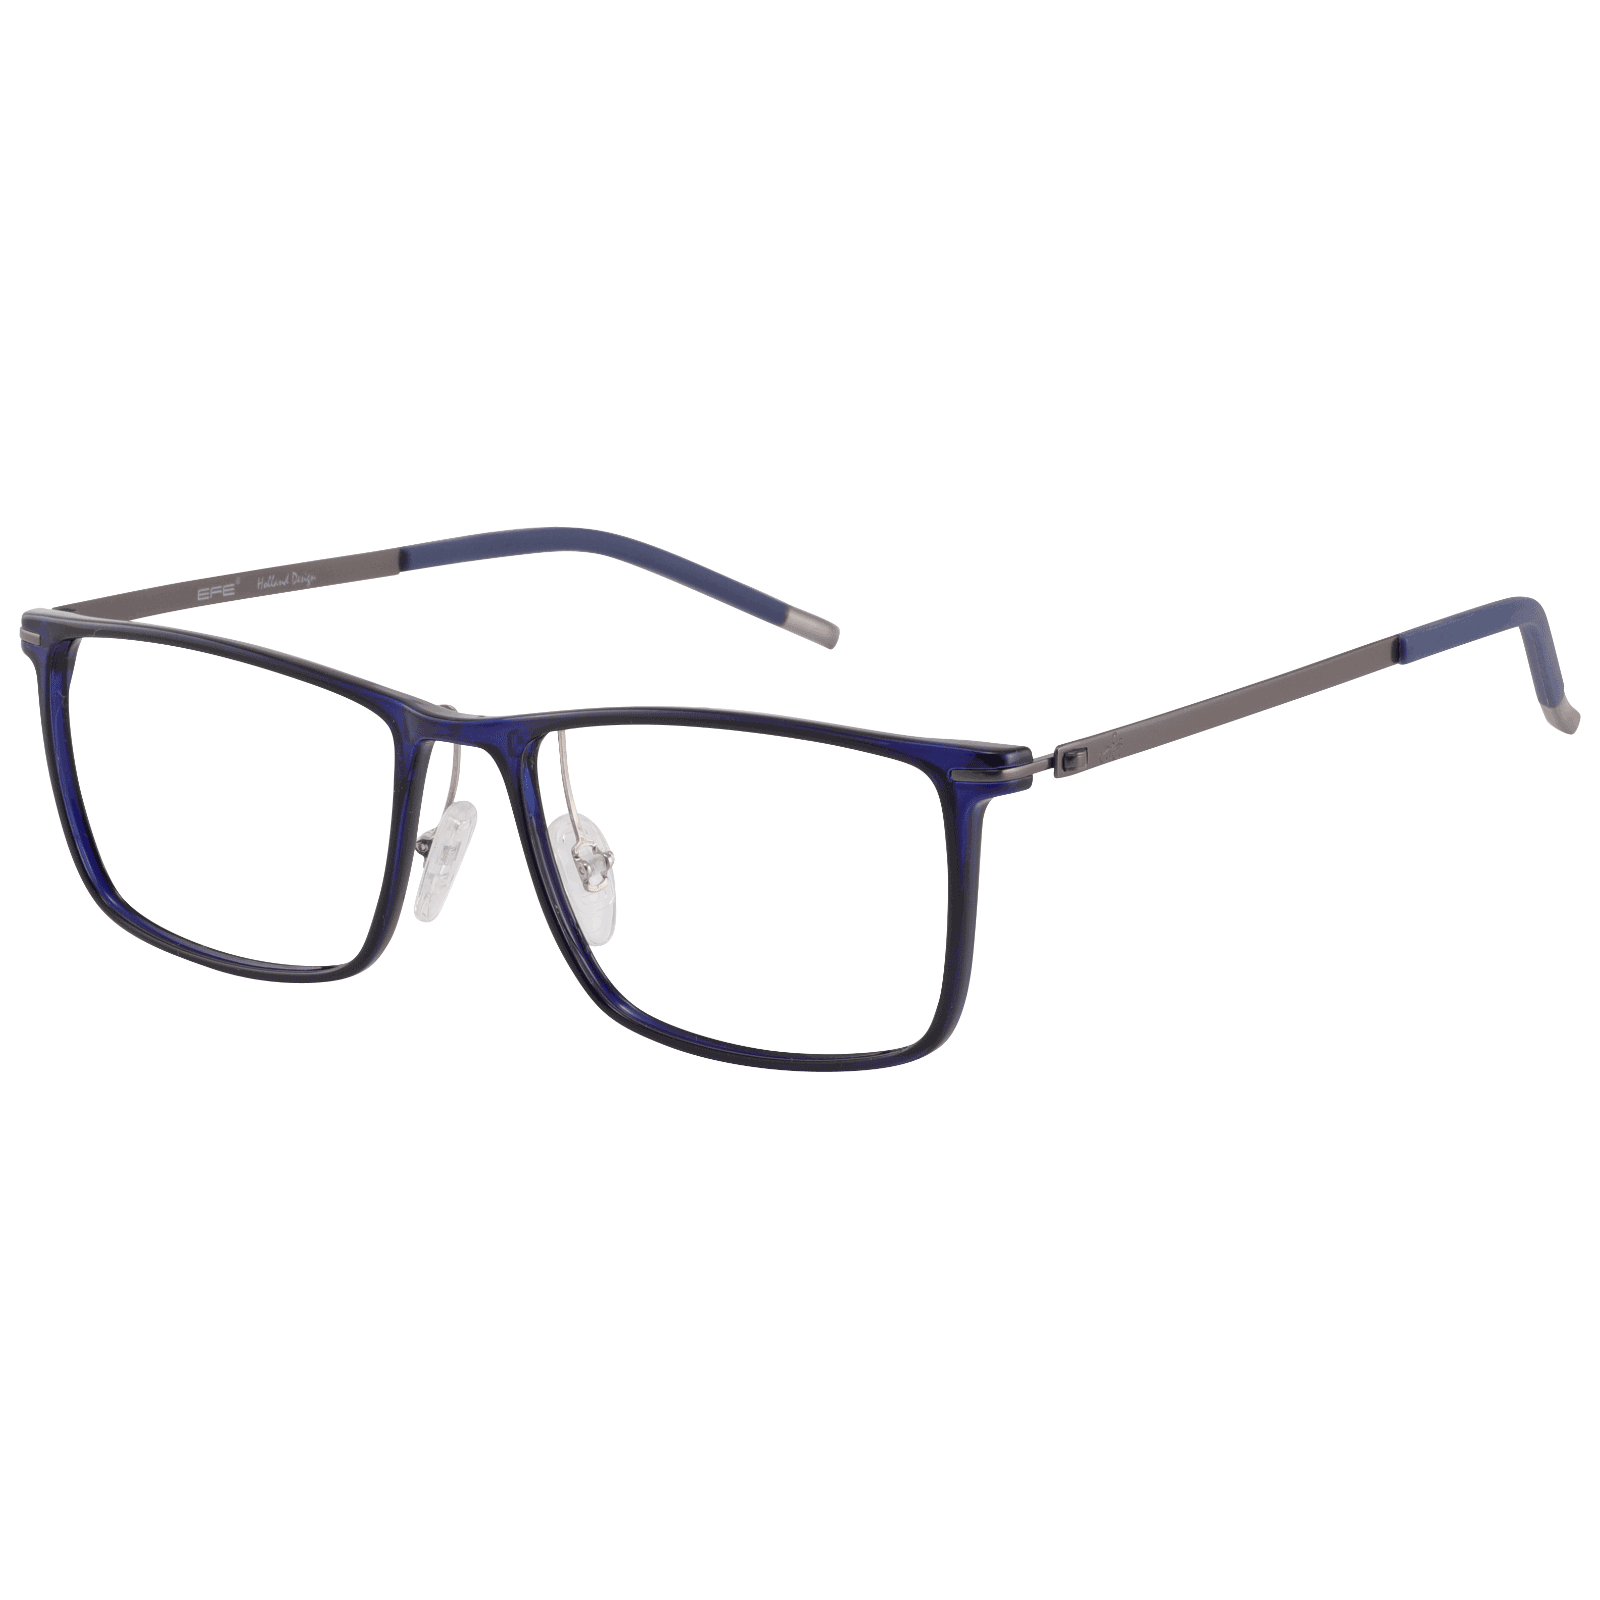 Galloway - Rectangle Blue-Gray Reading Glasses for Men